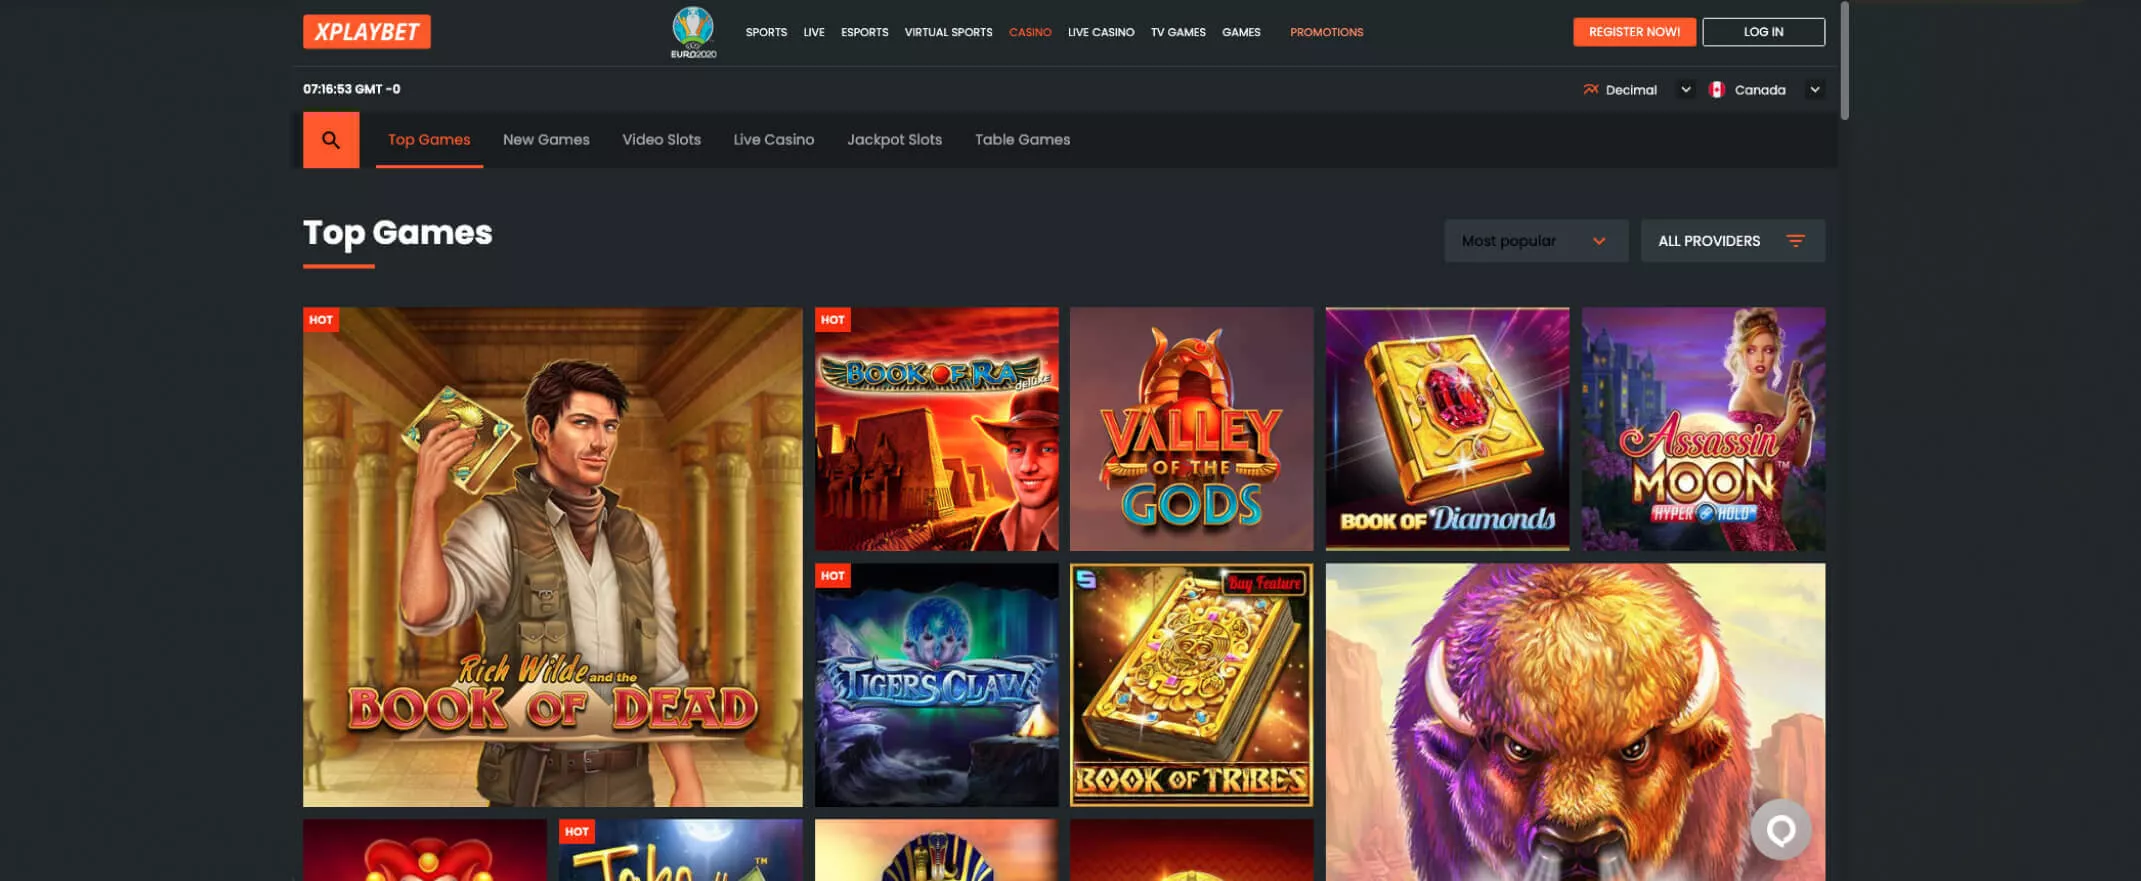 Xplaybet casino screenshot of the homepage (Canada)